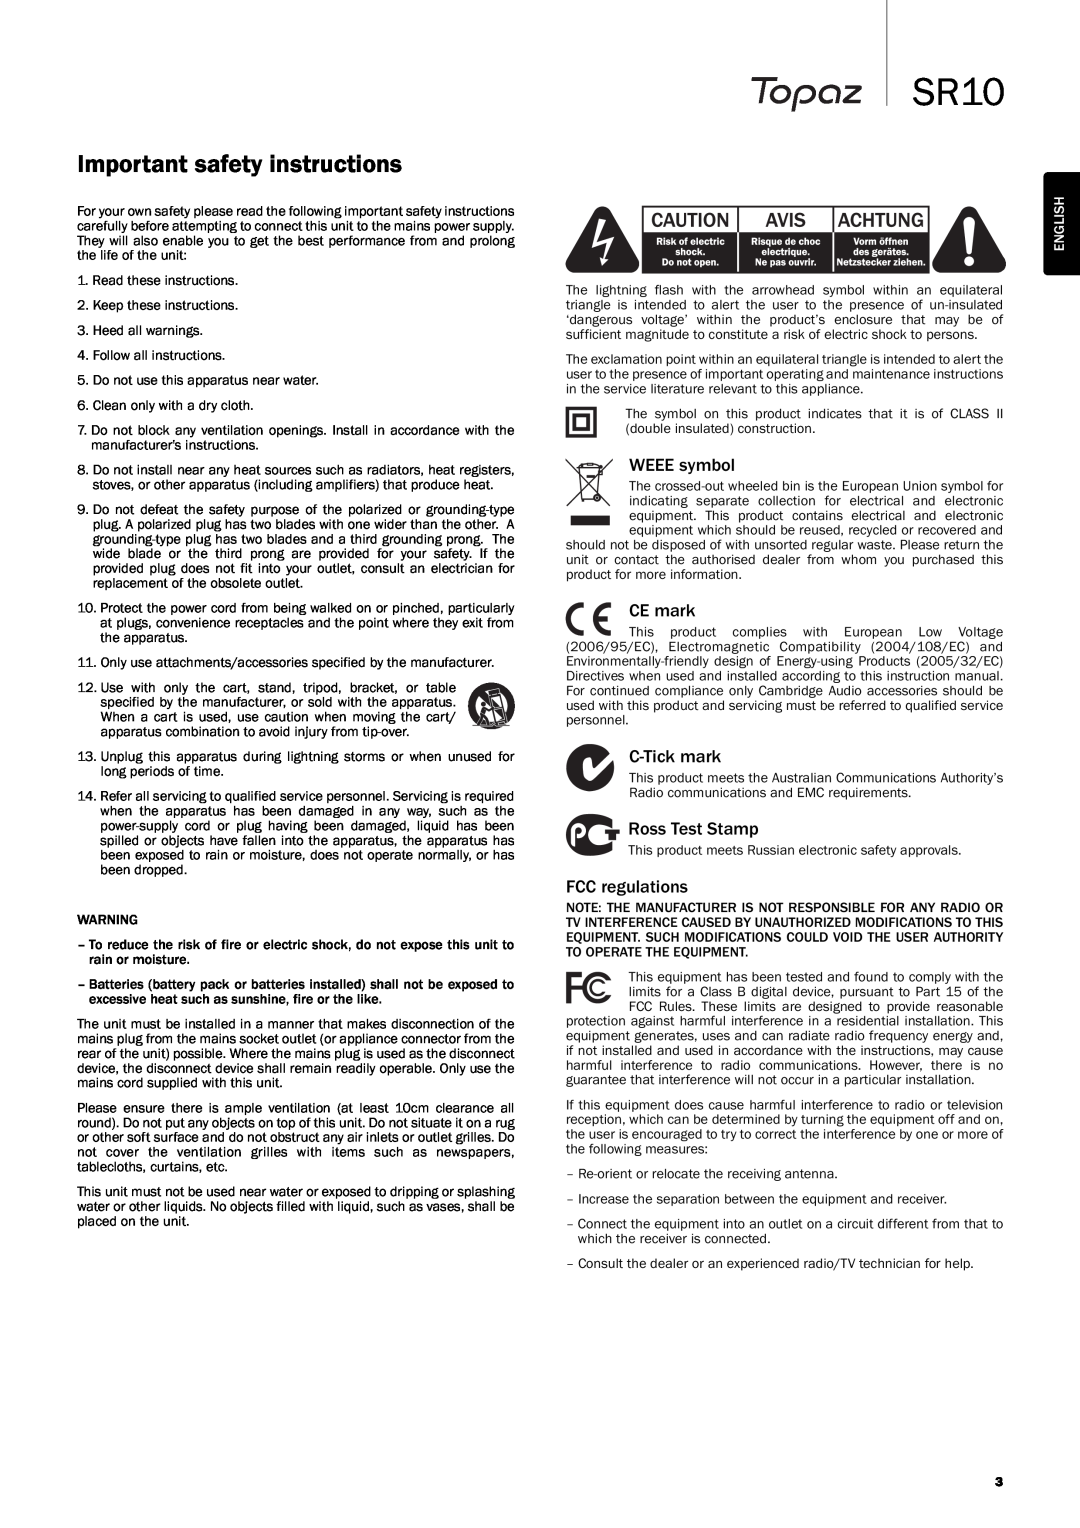 Cambridge Audio SR10 user manual Important safety instructions, English 